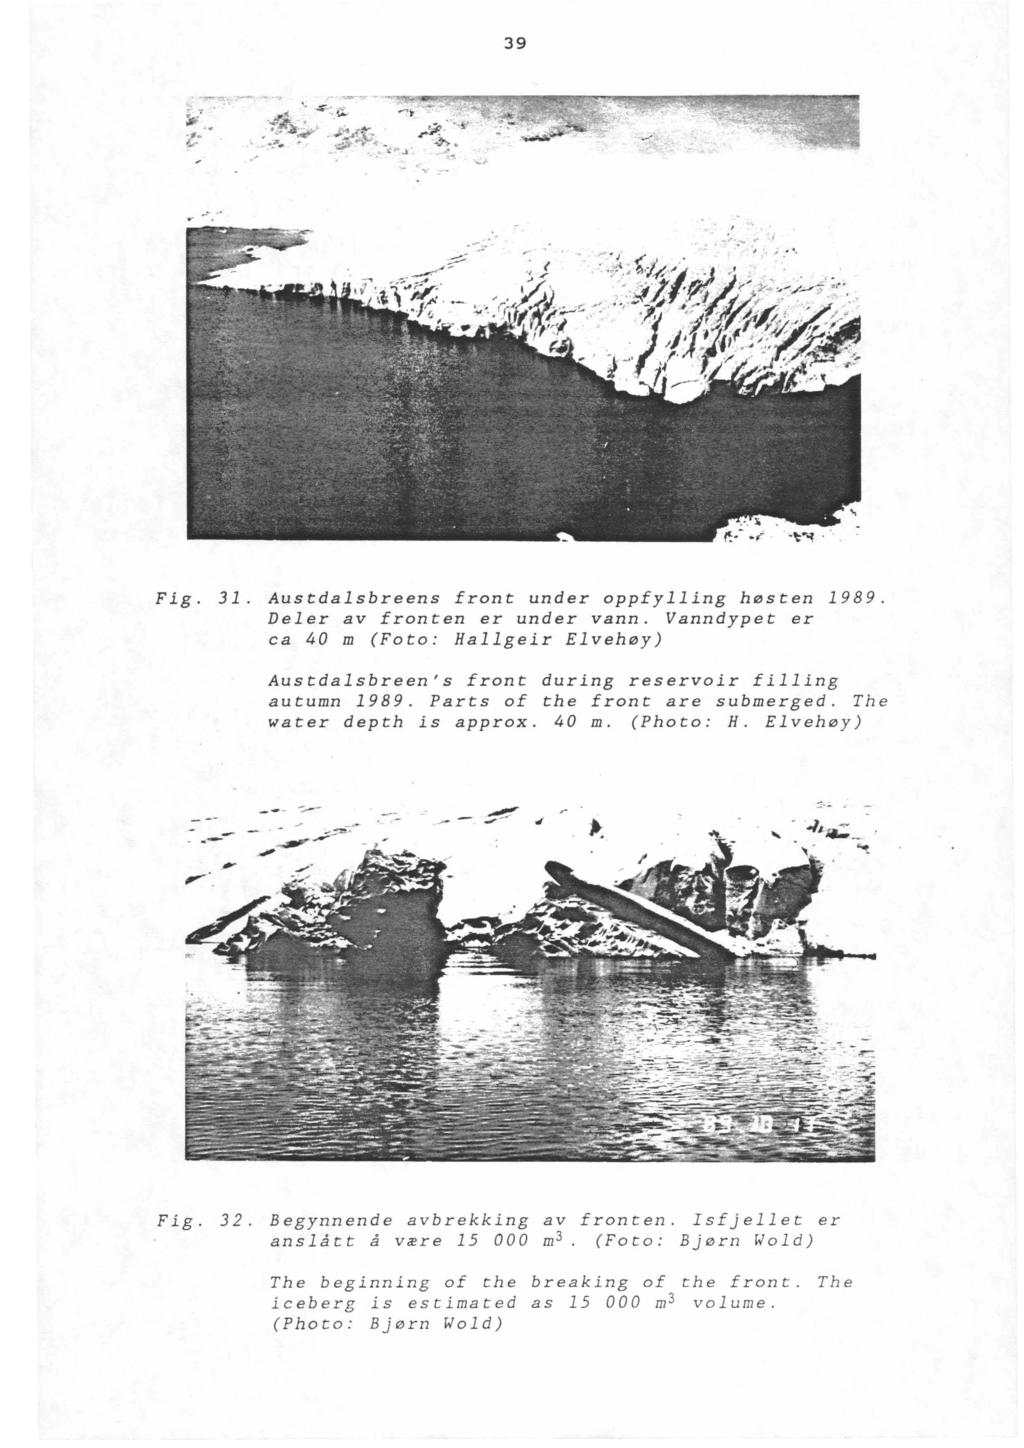 39 Fig. 31. Austdalsbreens front under oppfylling høsten 1989. Deler av fronten er under vann. Vanndypet er ca 40 m (Foto: Hallgeir Elvehøy) Austdalsbreen's front during reservoir filling autumn 1989.